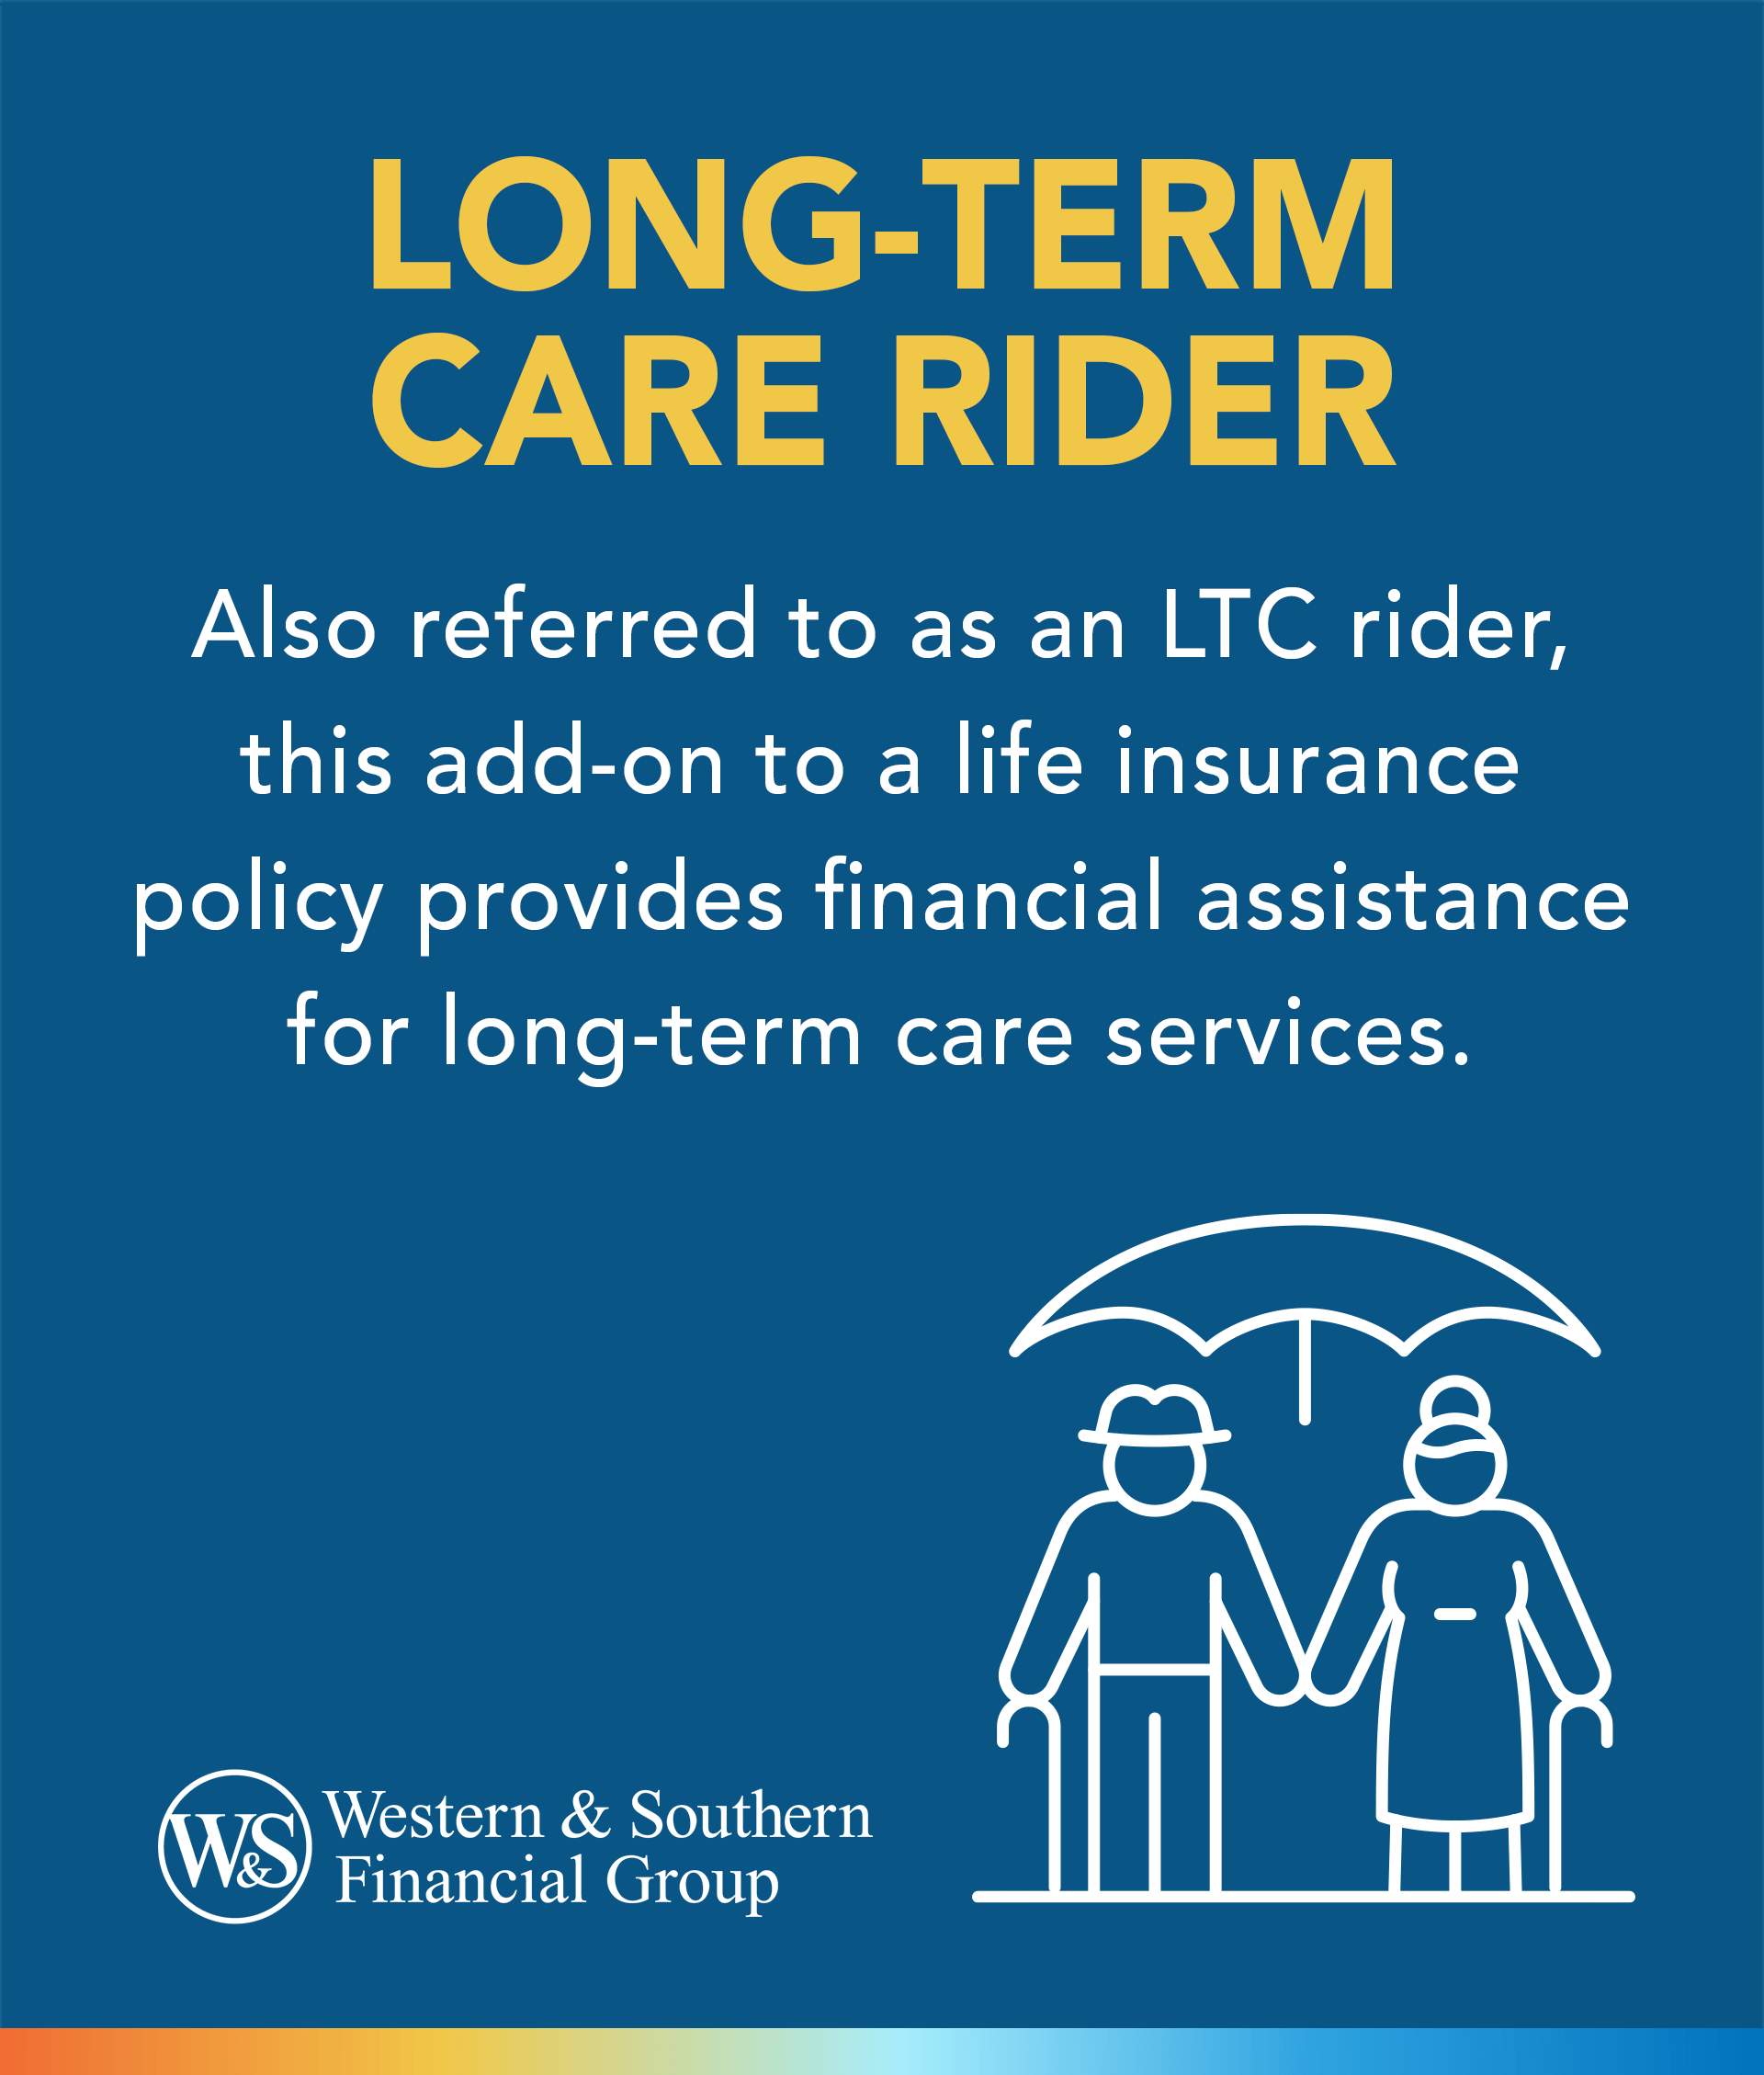 Long-Term Care (LTC) Rider Definition